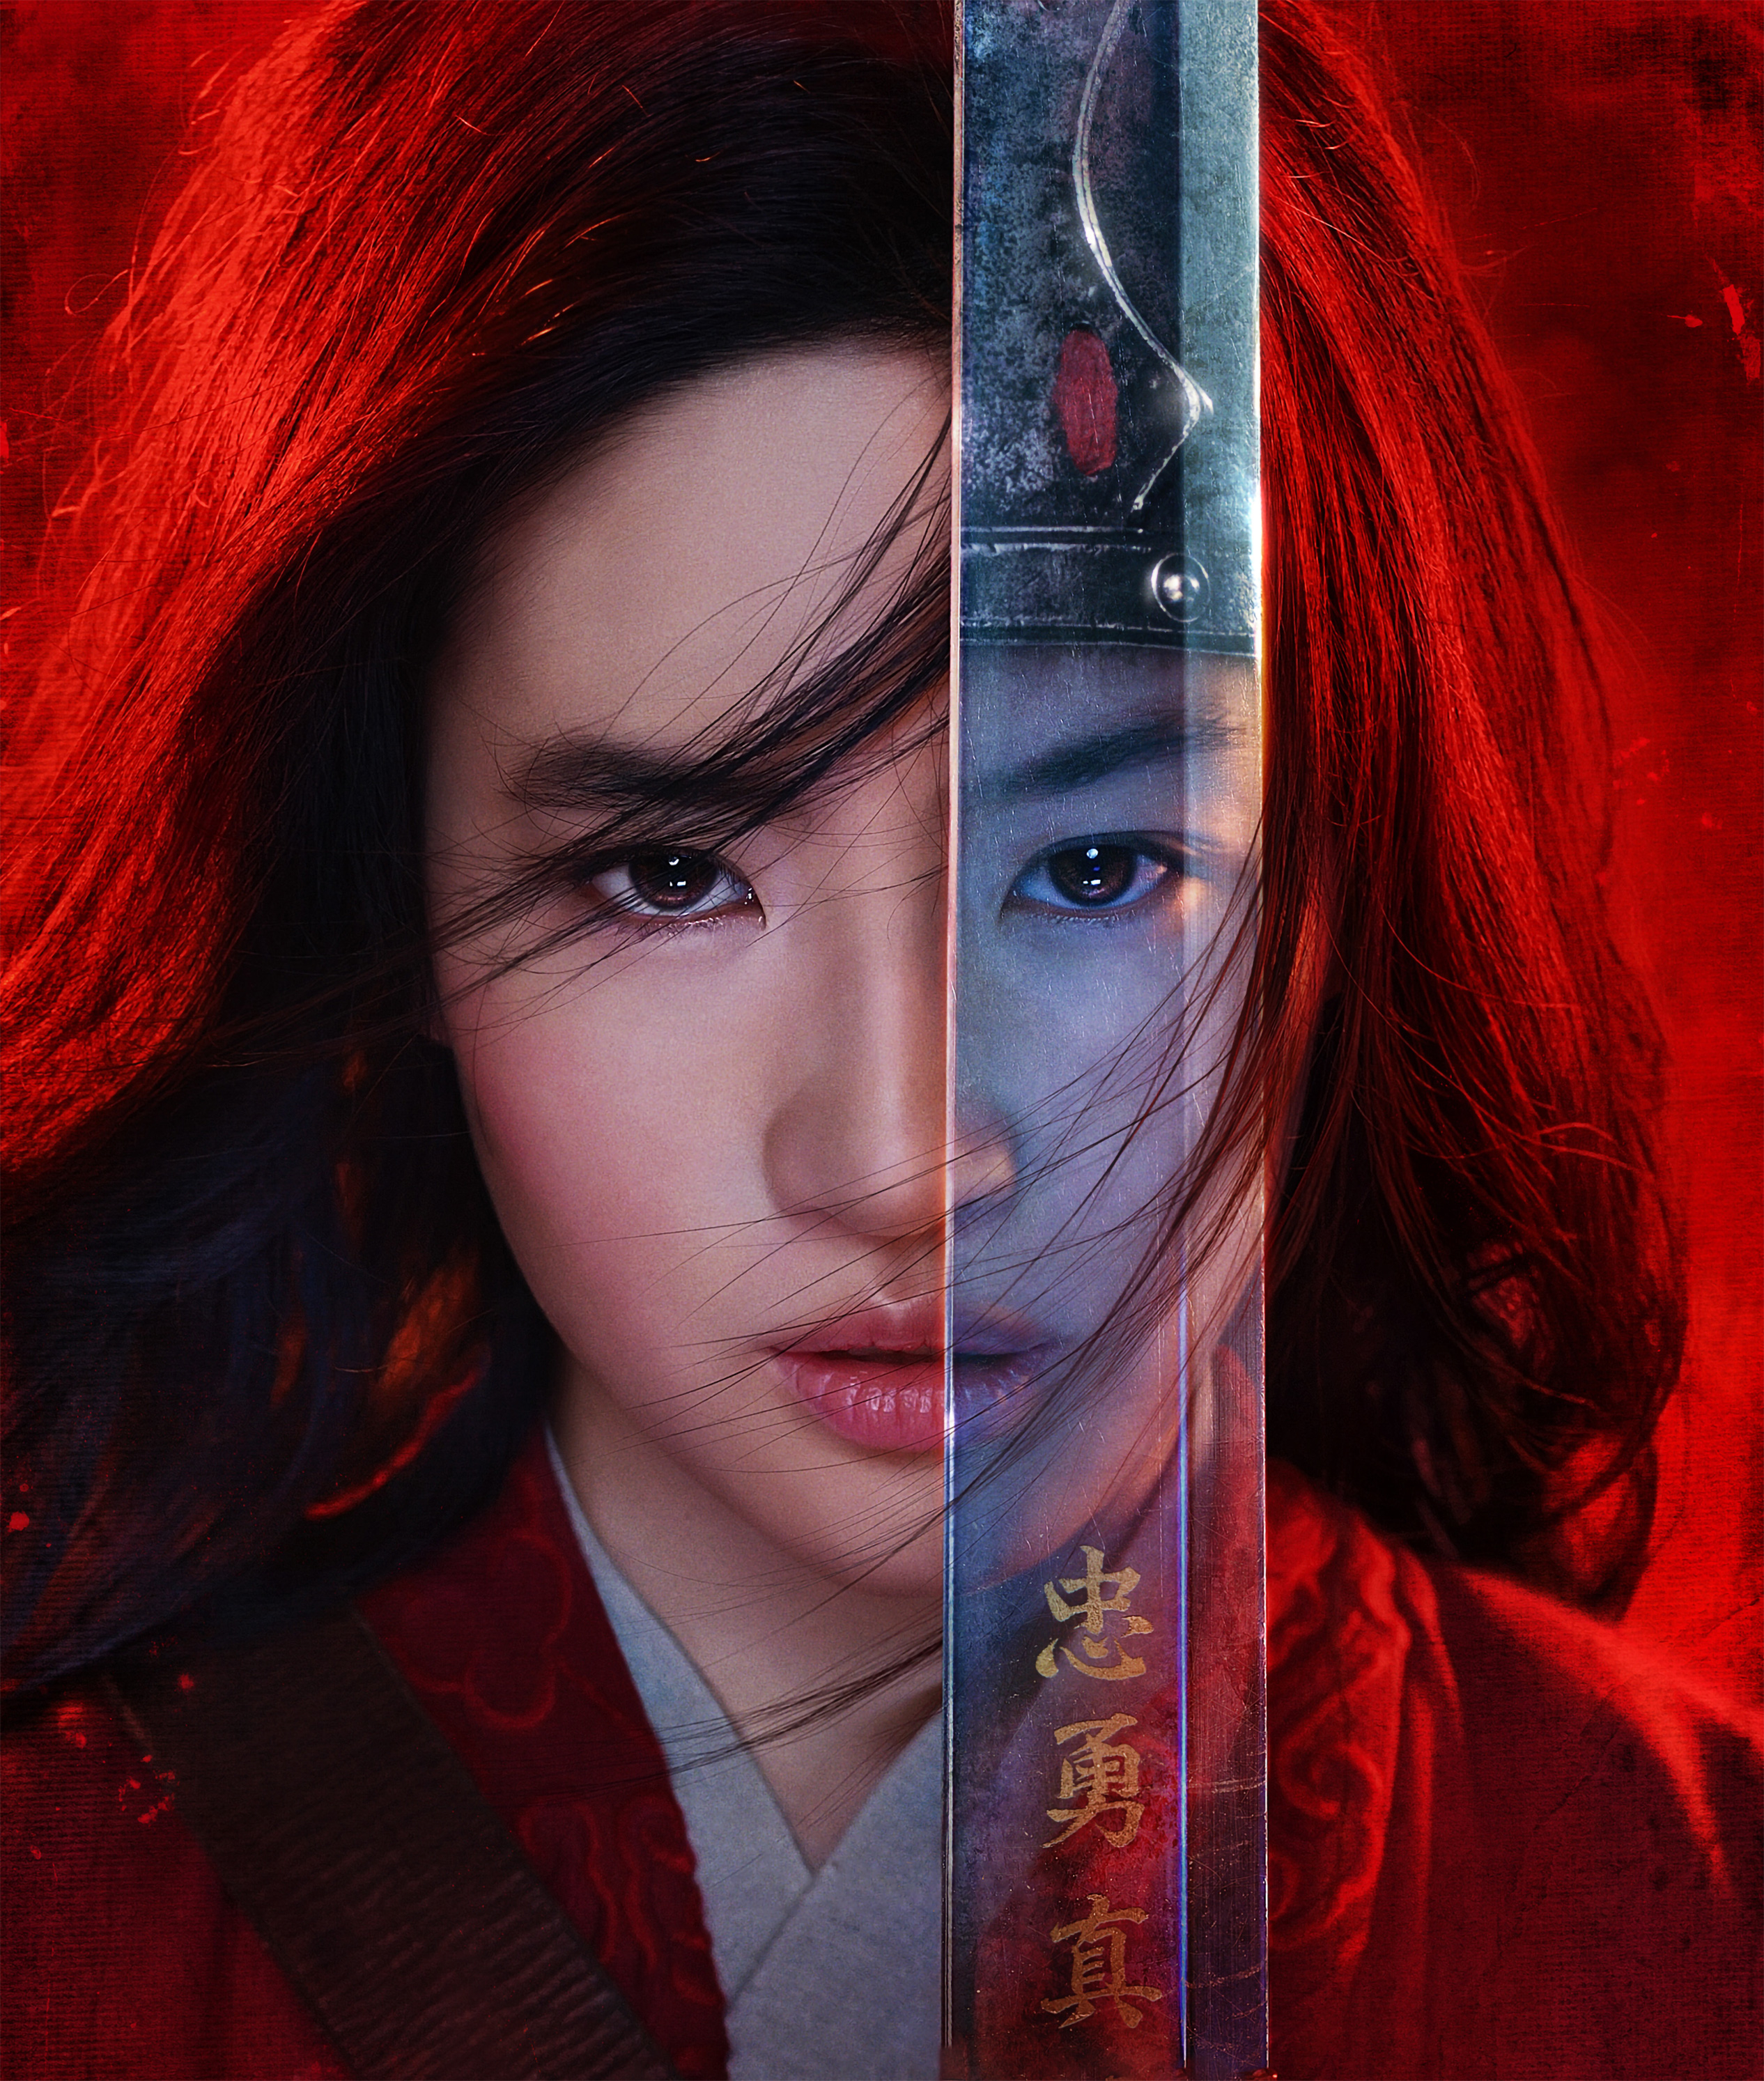 Mulan 2020 Movie Poster Wallpaper, HD Movies 4K Wallpapers, Images